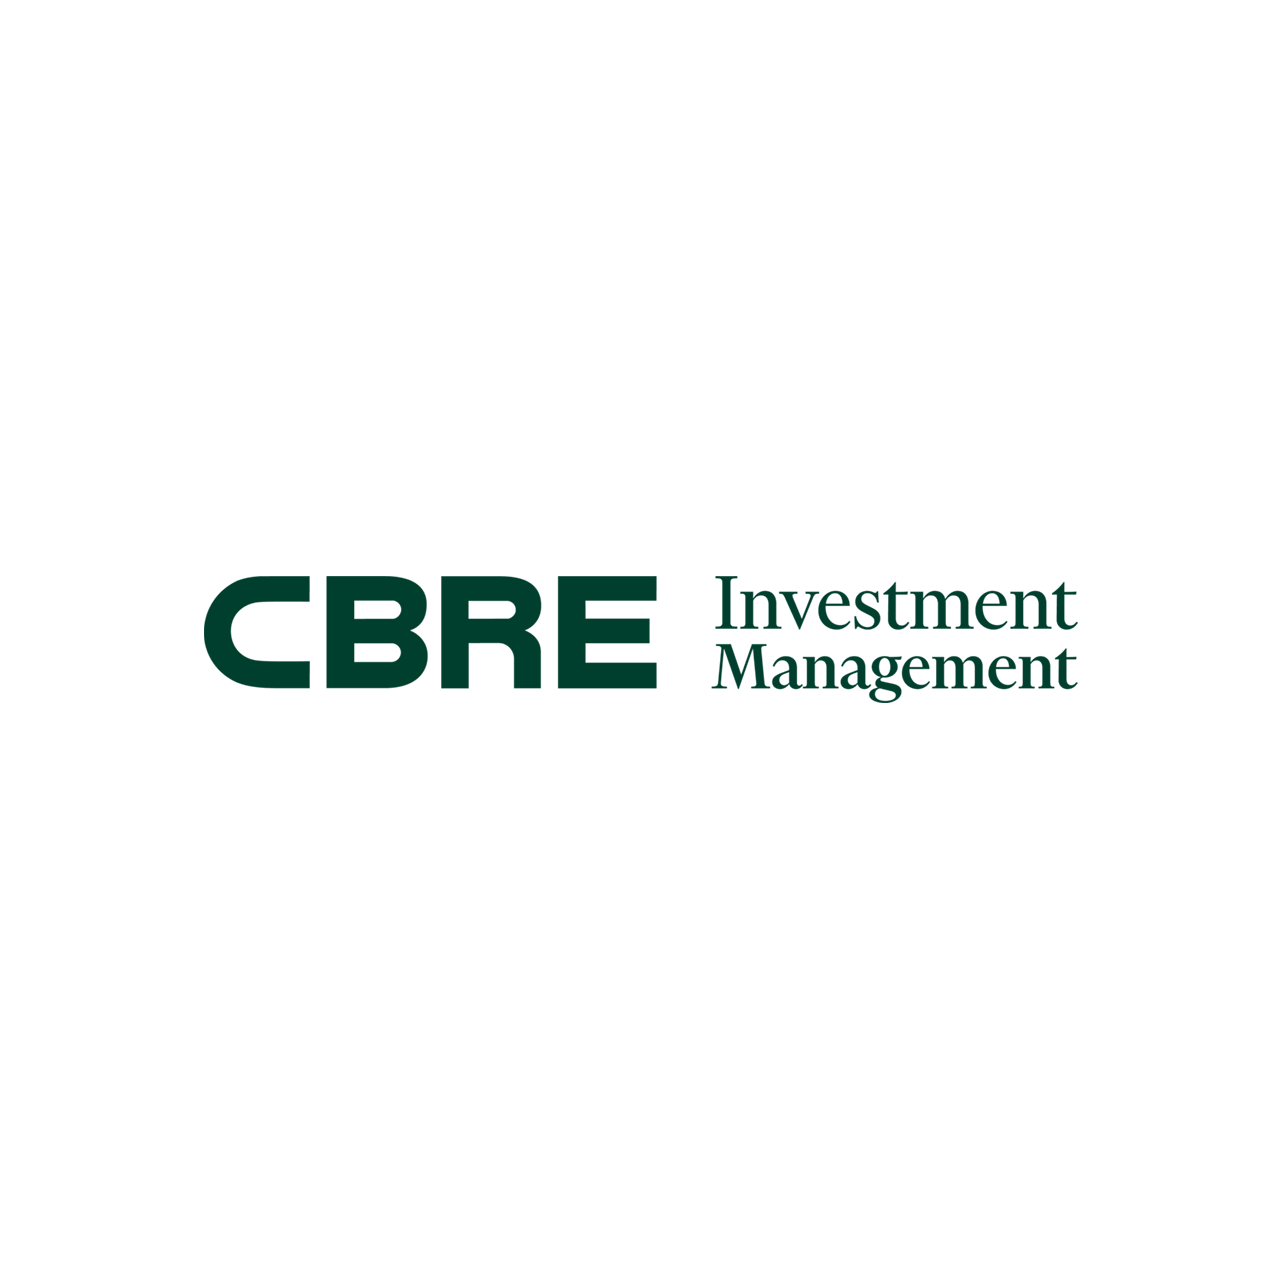 CBRE Investment Management